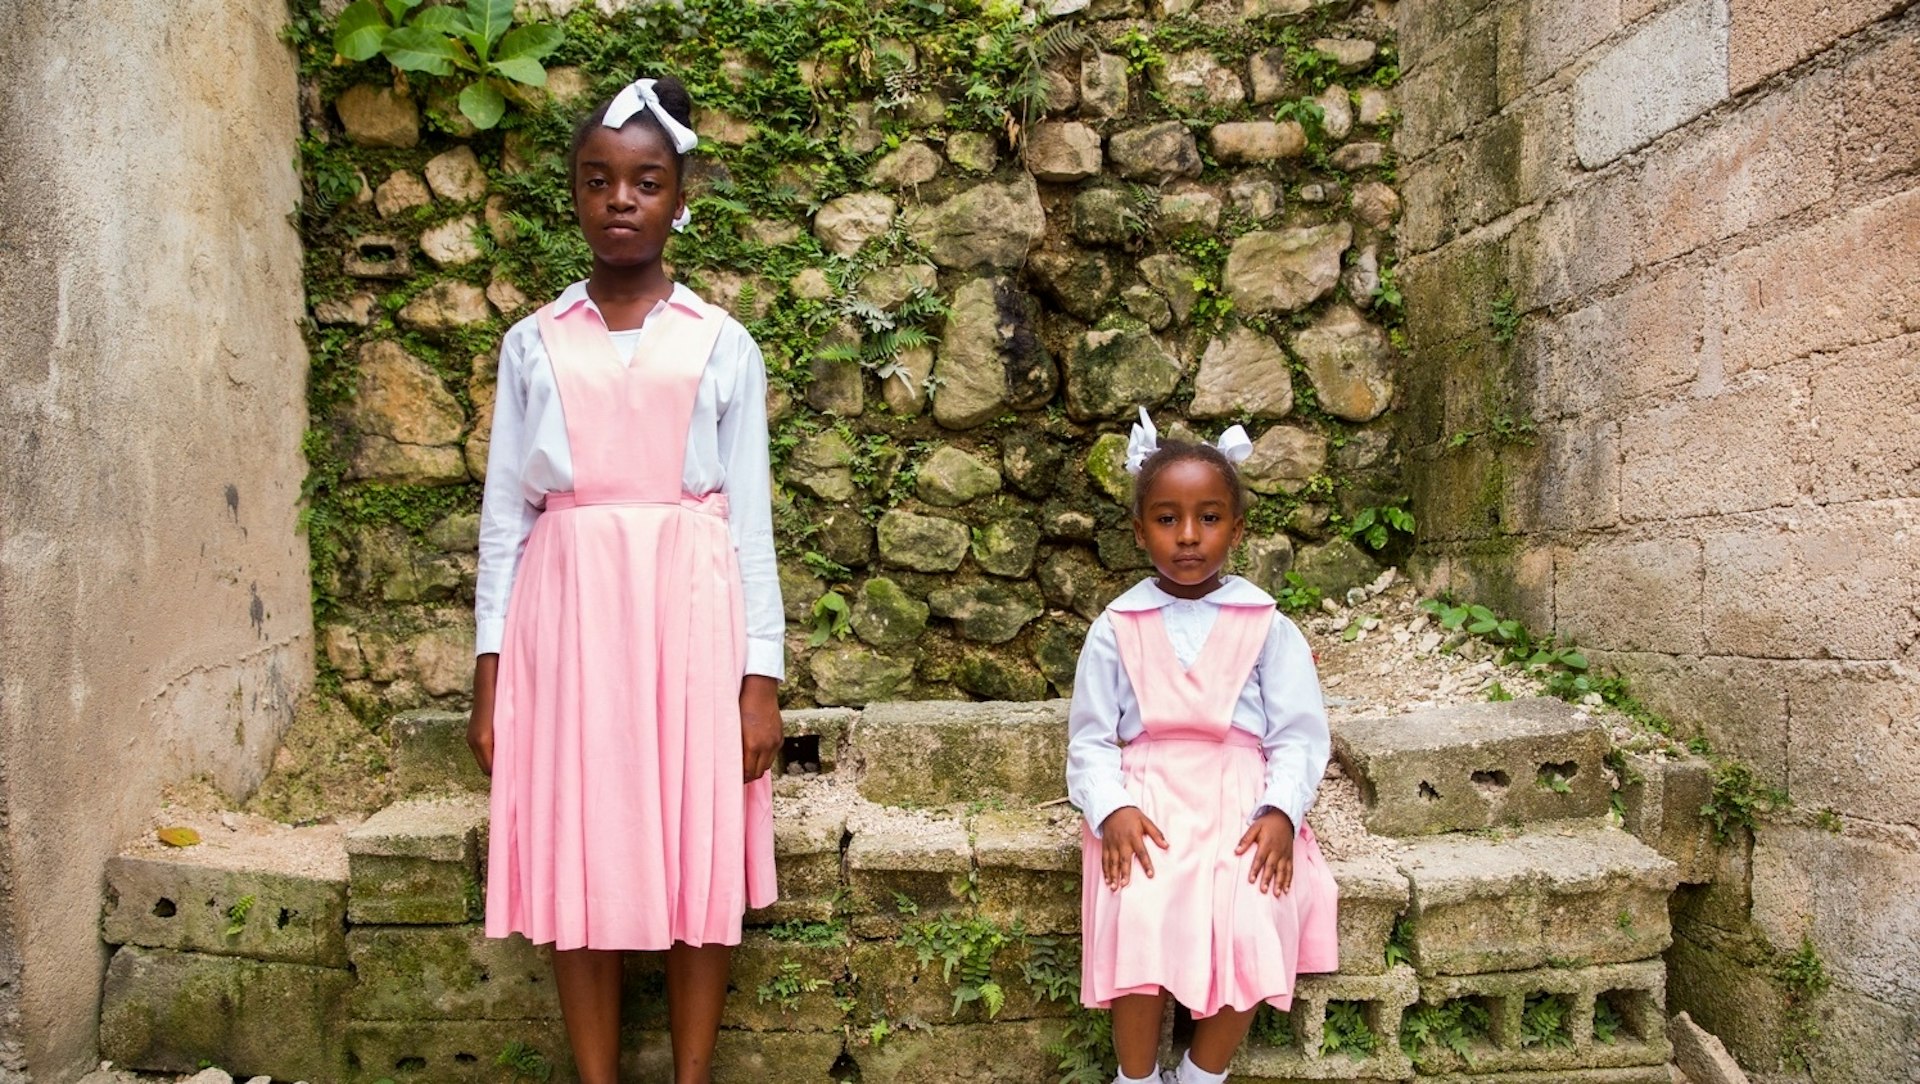 Vivid street shots of life in modern Haiti